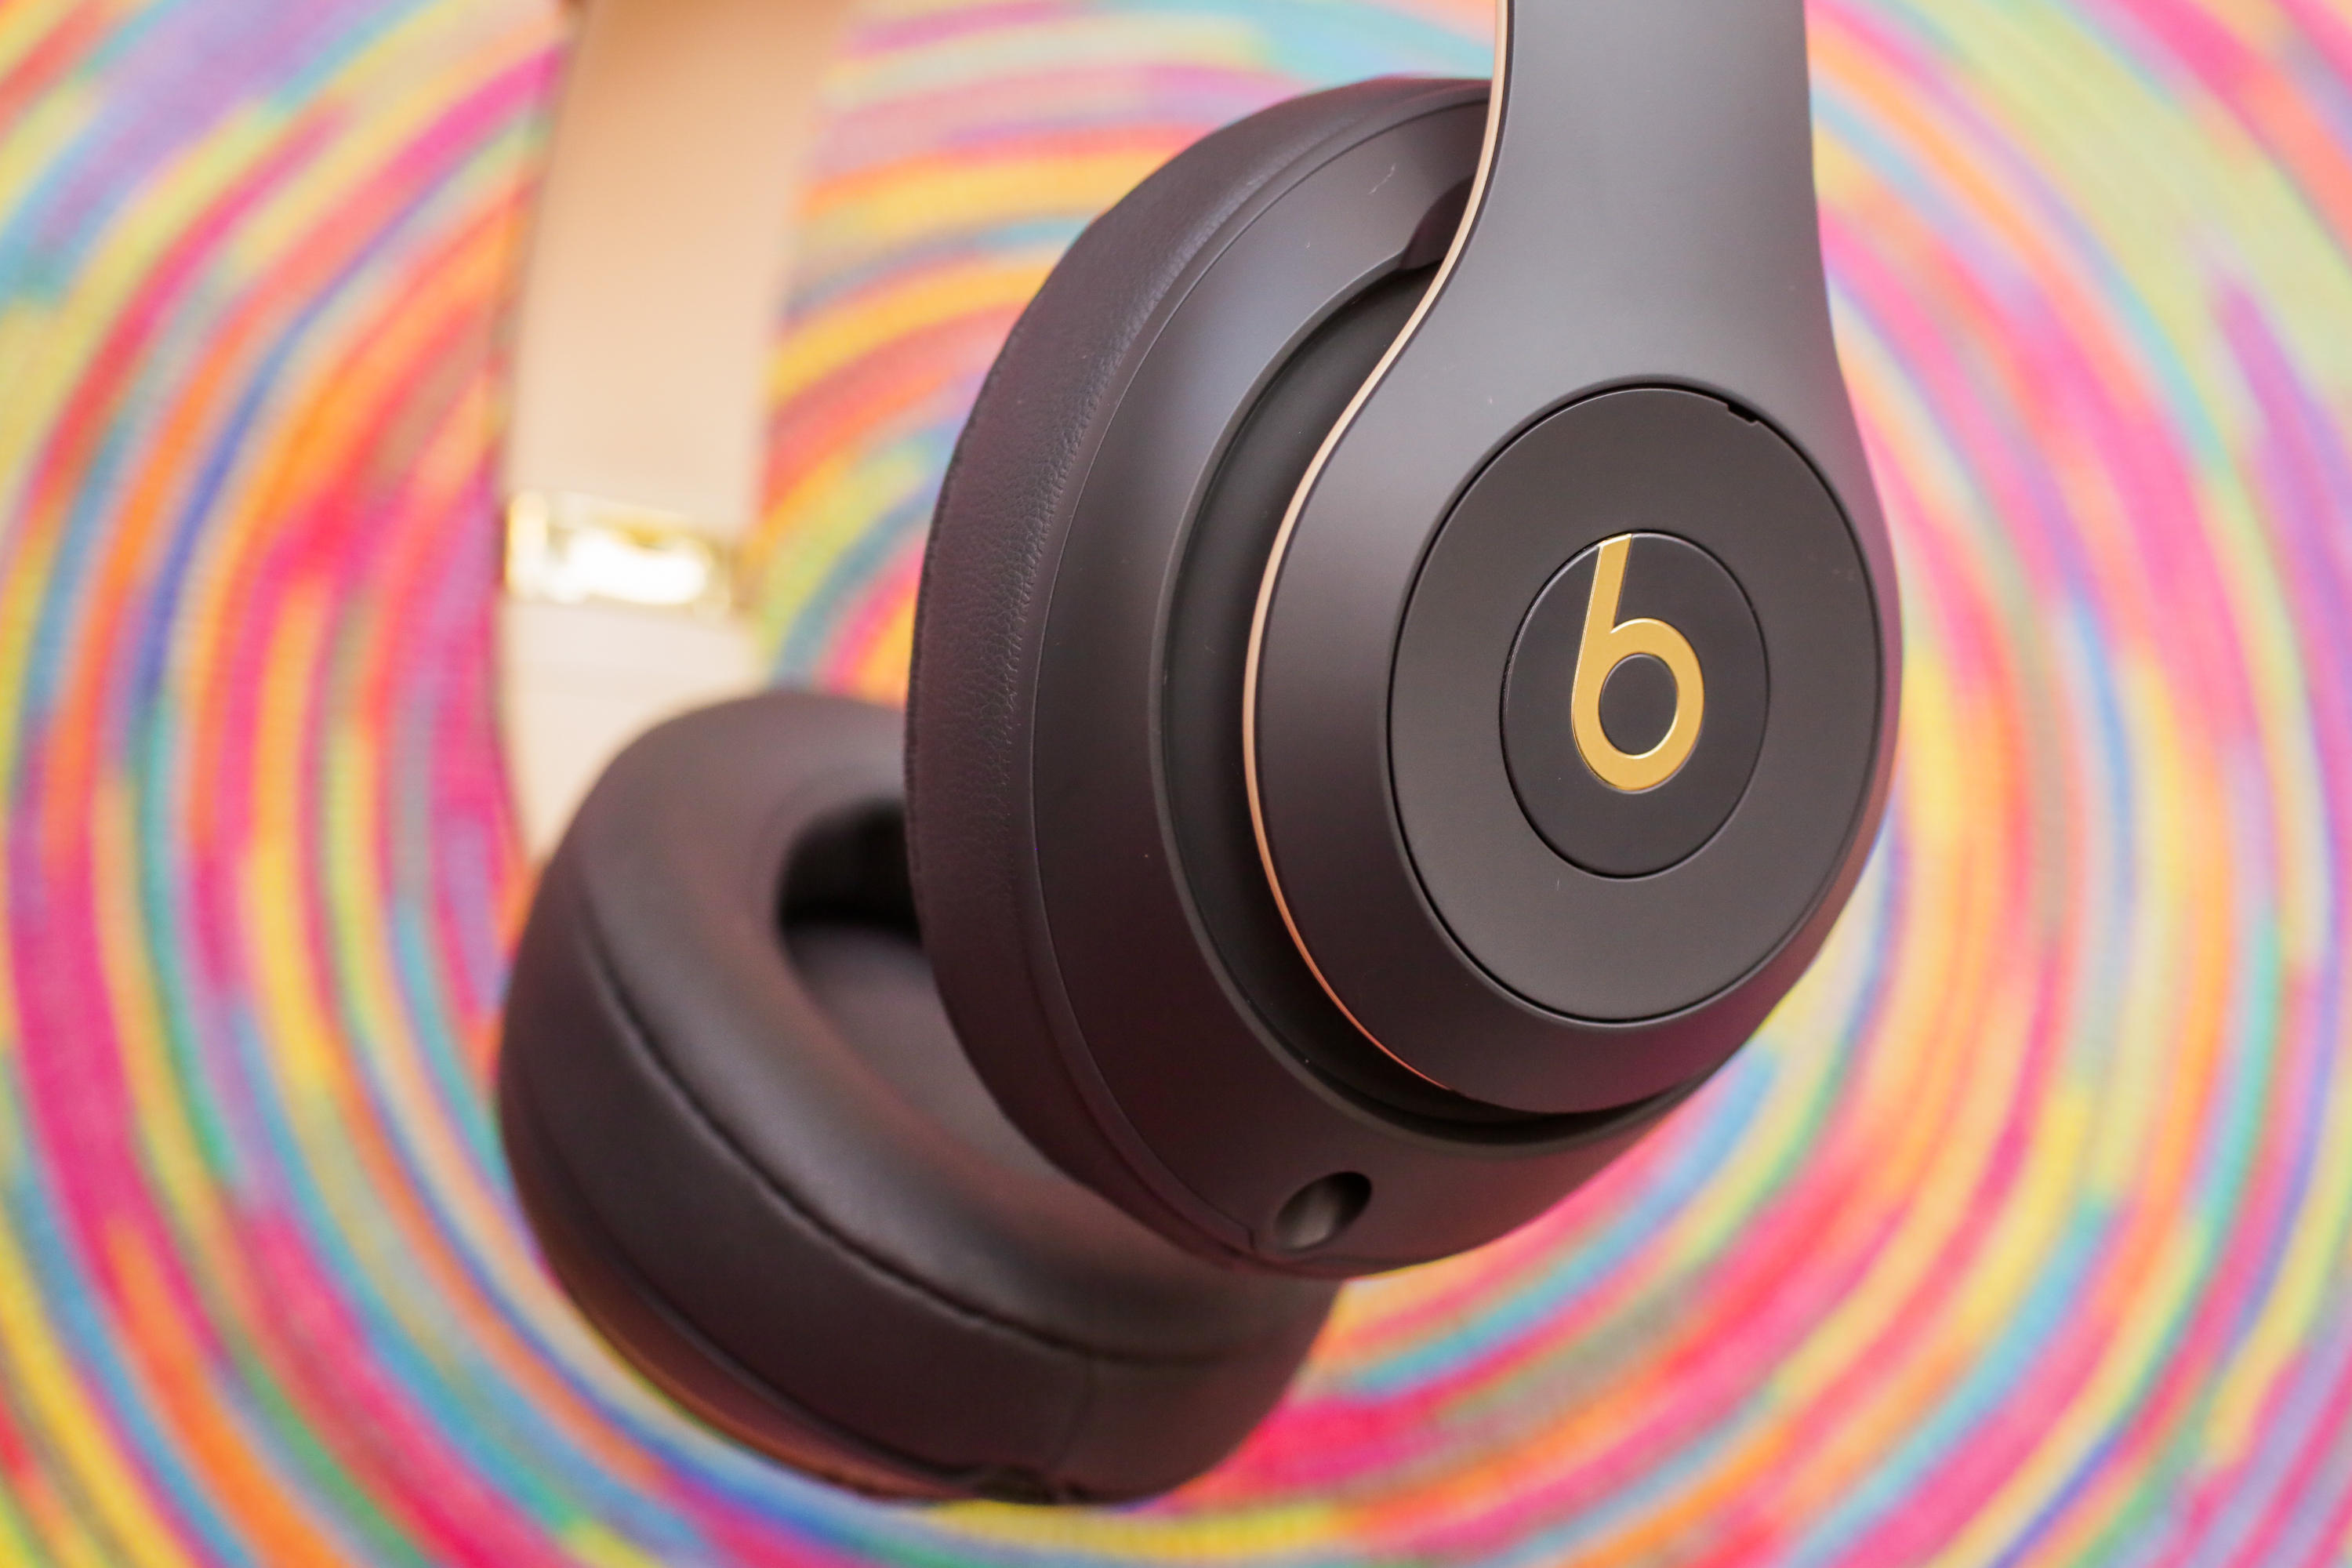 Black Friday deal on Beats headphones 